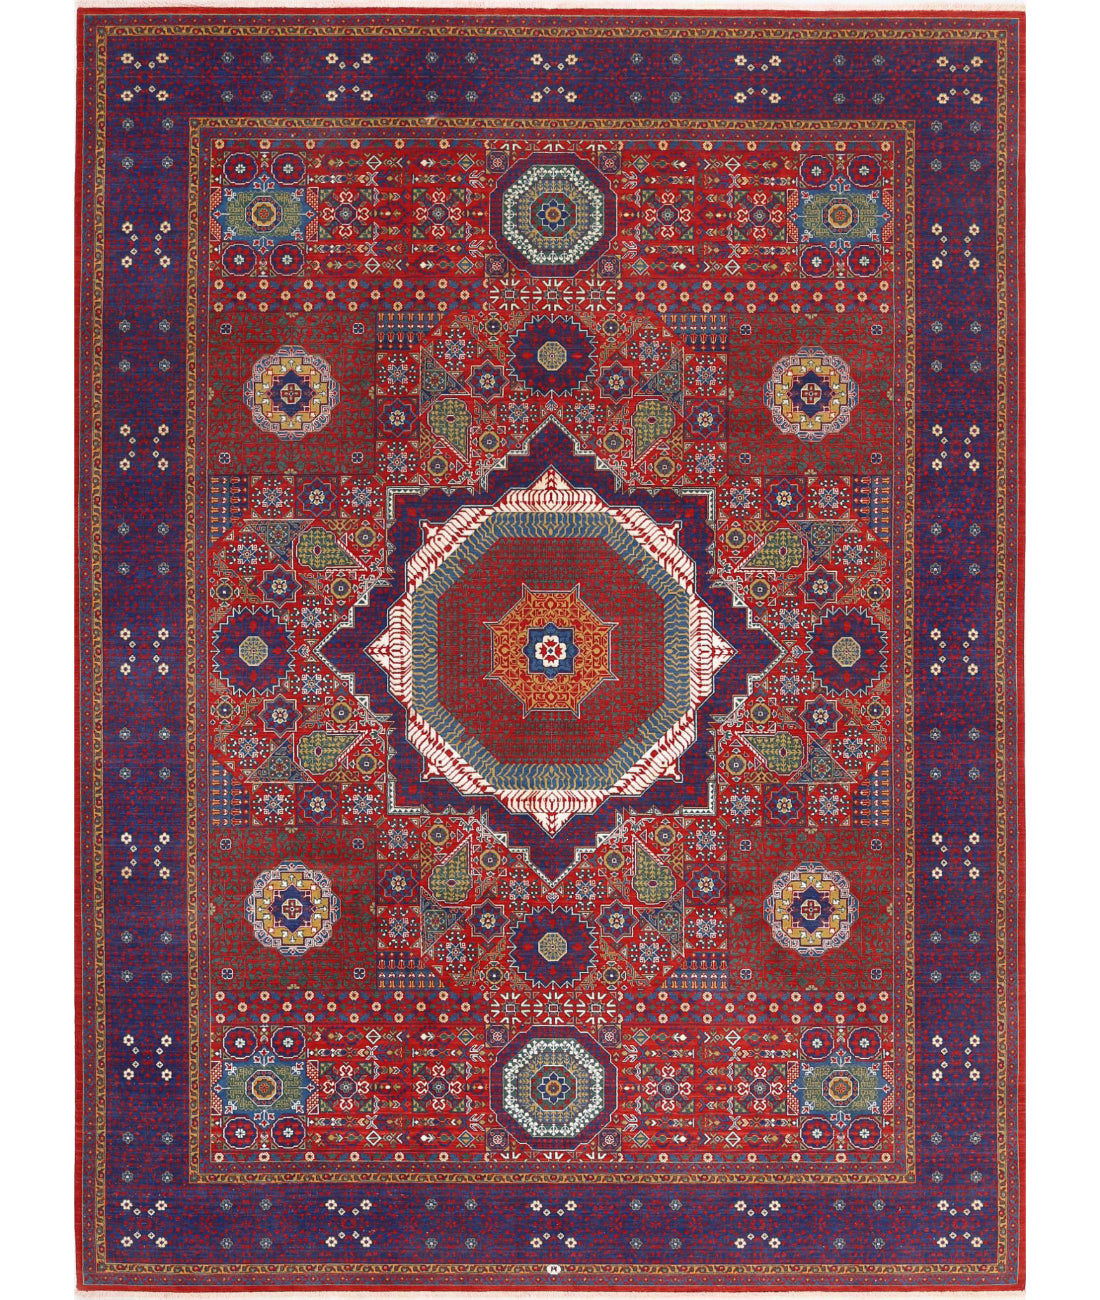 Gulshan Wool & Bamboo Silk Rug - 8'10'' x 11'11'' 8'10'' x 11'11'' (265 X 358) / Red / Blue